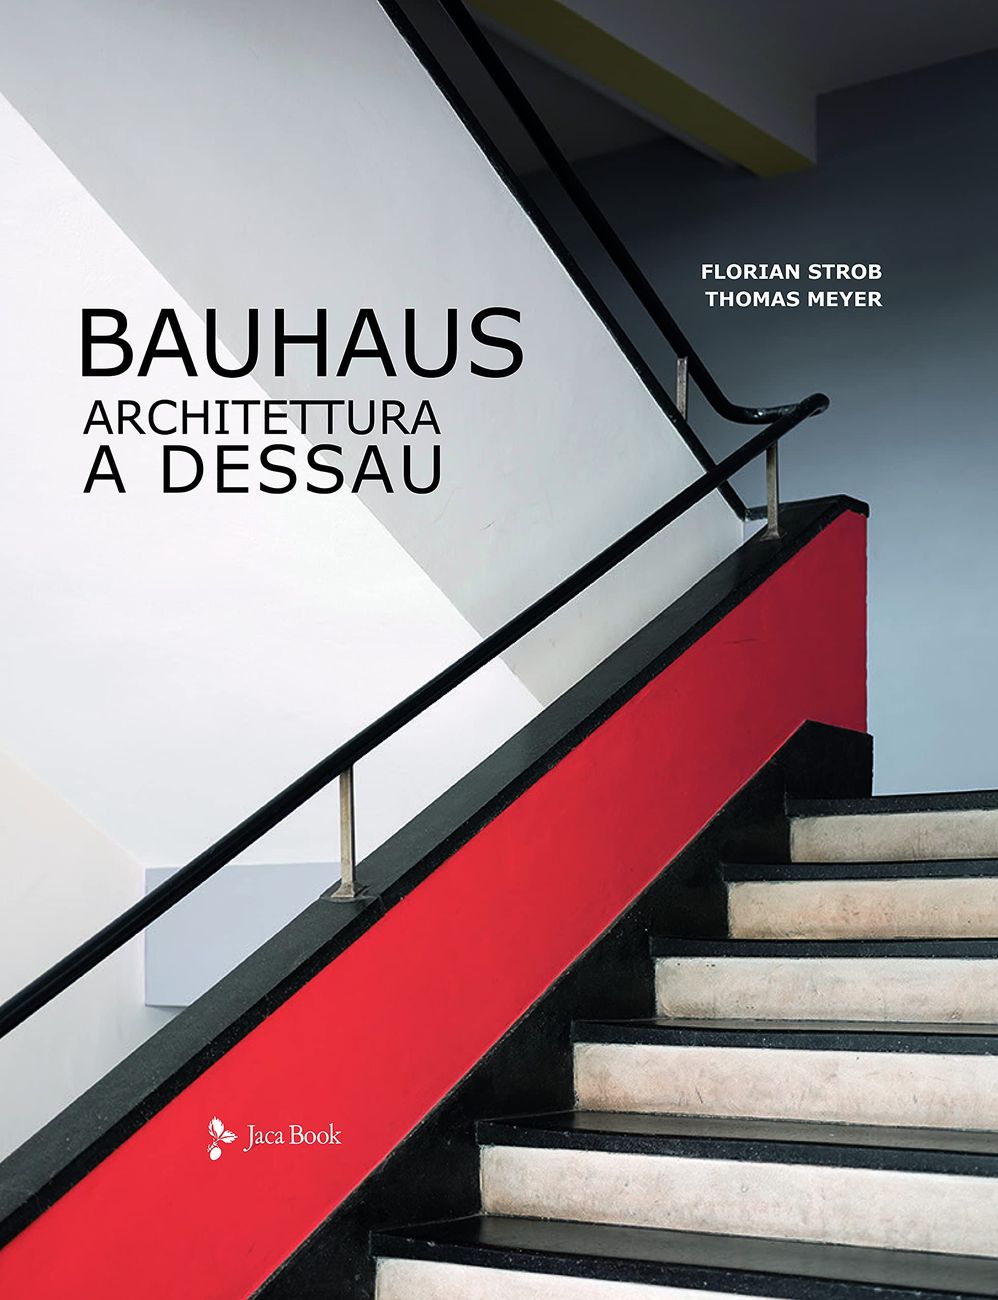 Florian Strob & Thomas Meyer – Bauhaus. Architettura a Dessau (Jaca Book, Milano 2021)